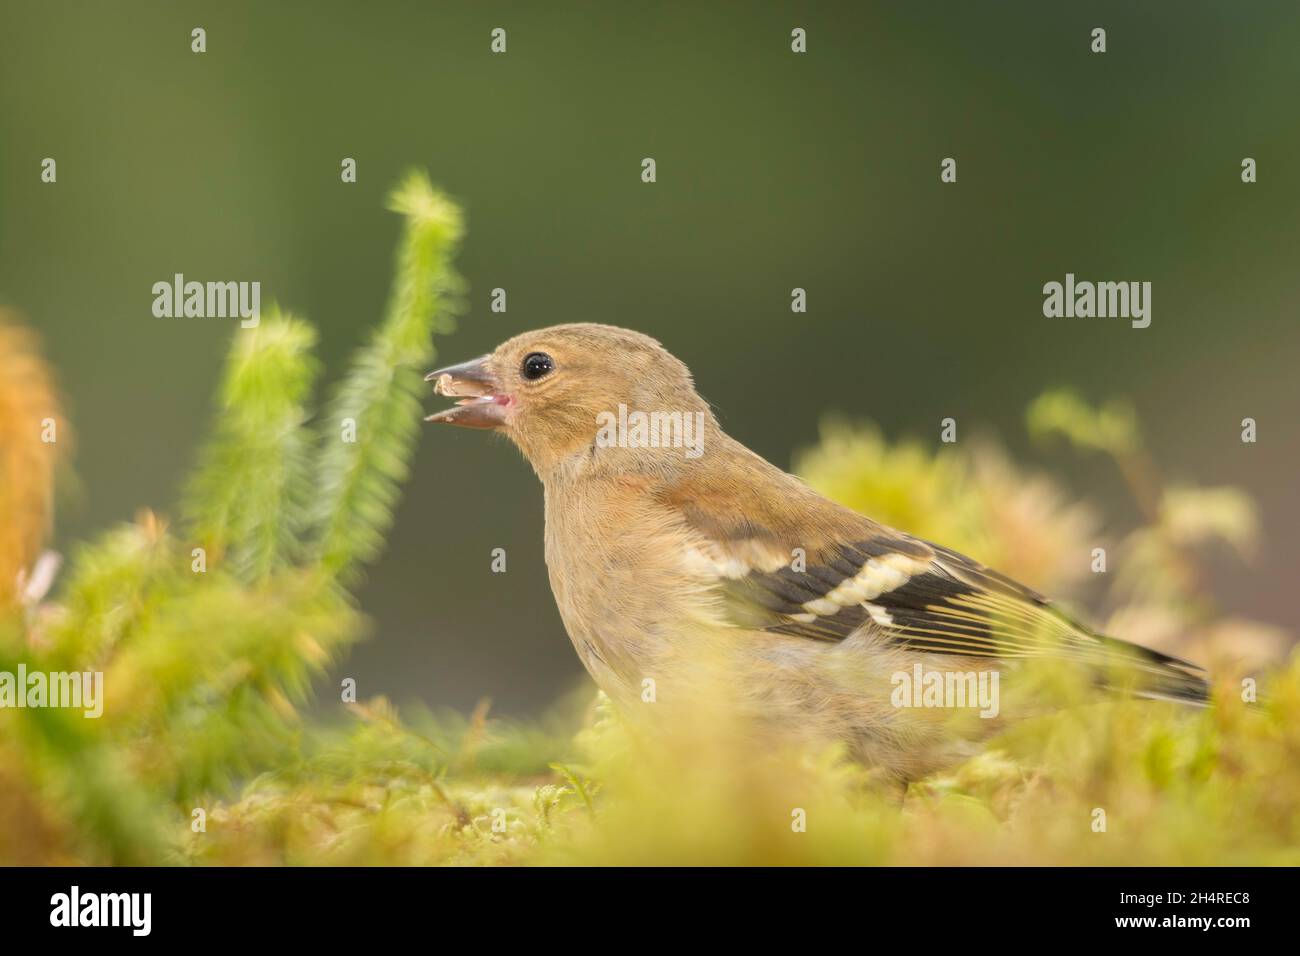 young bullfinch standing between moss Stock Photo